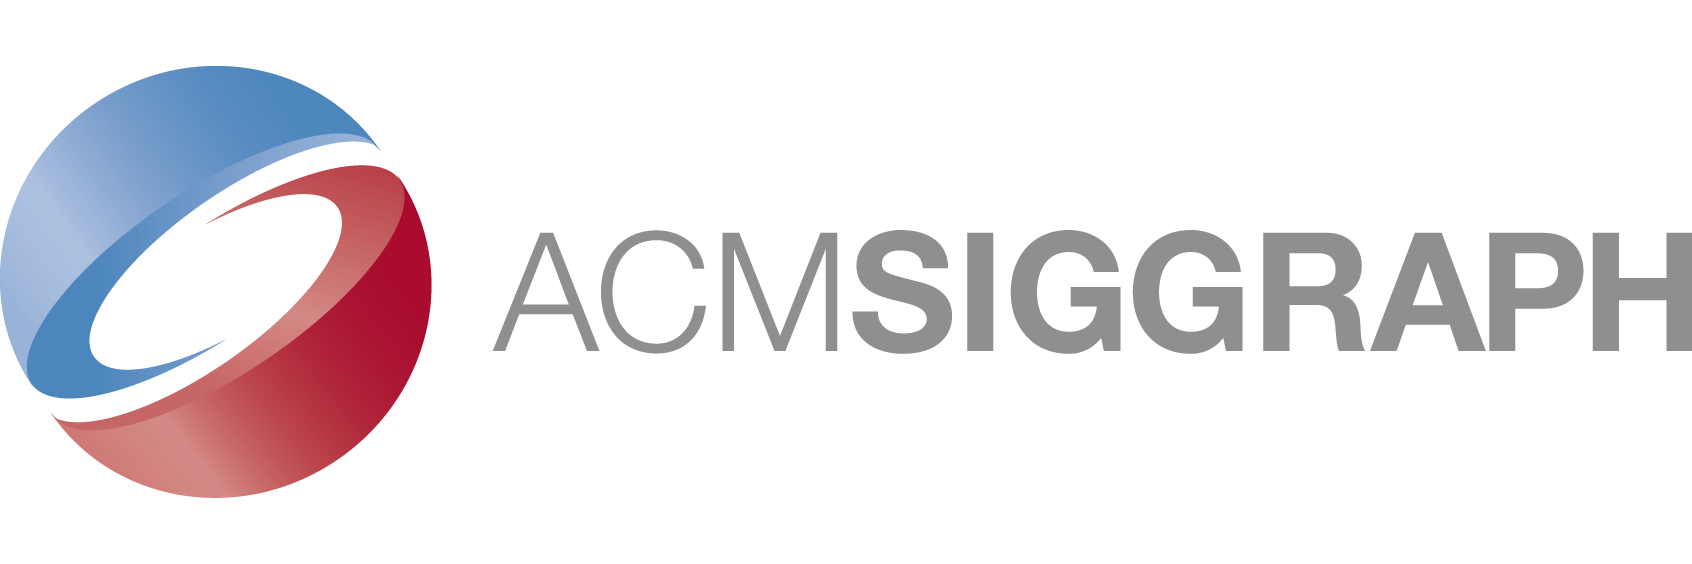 ACM SIGGRAPH logo